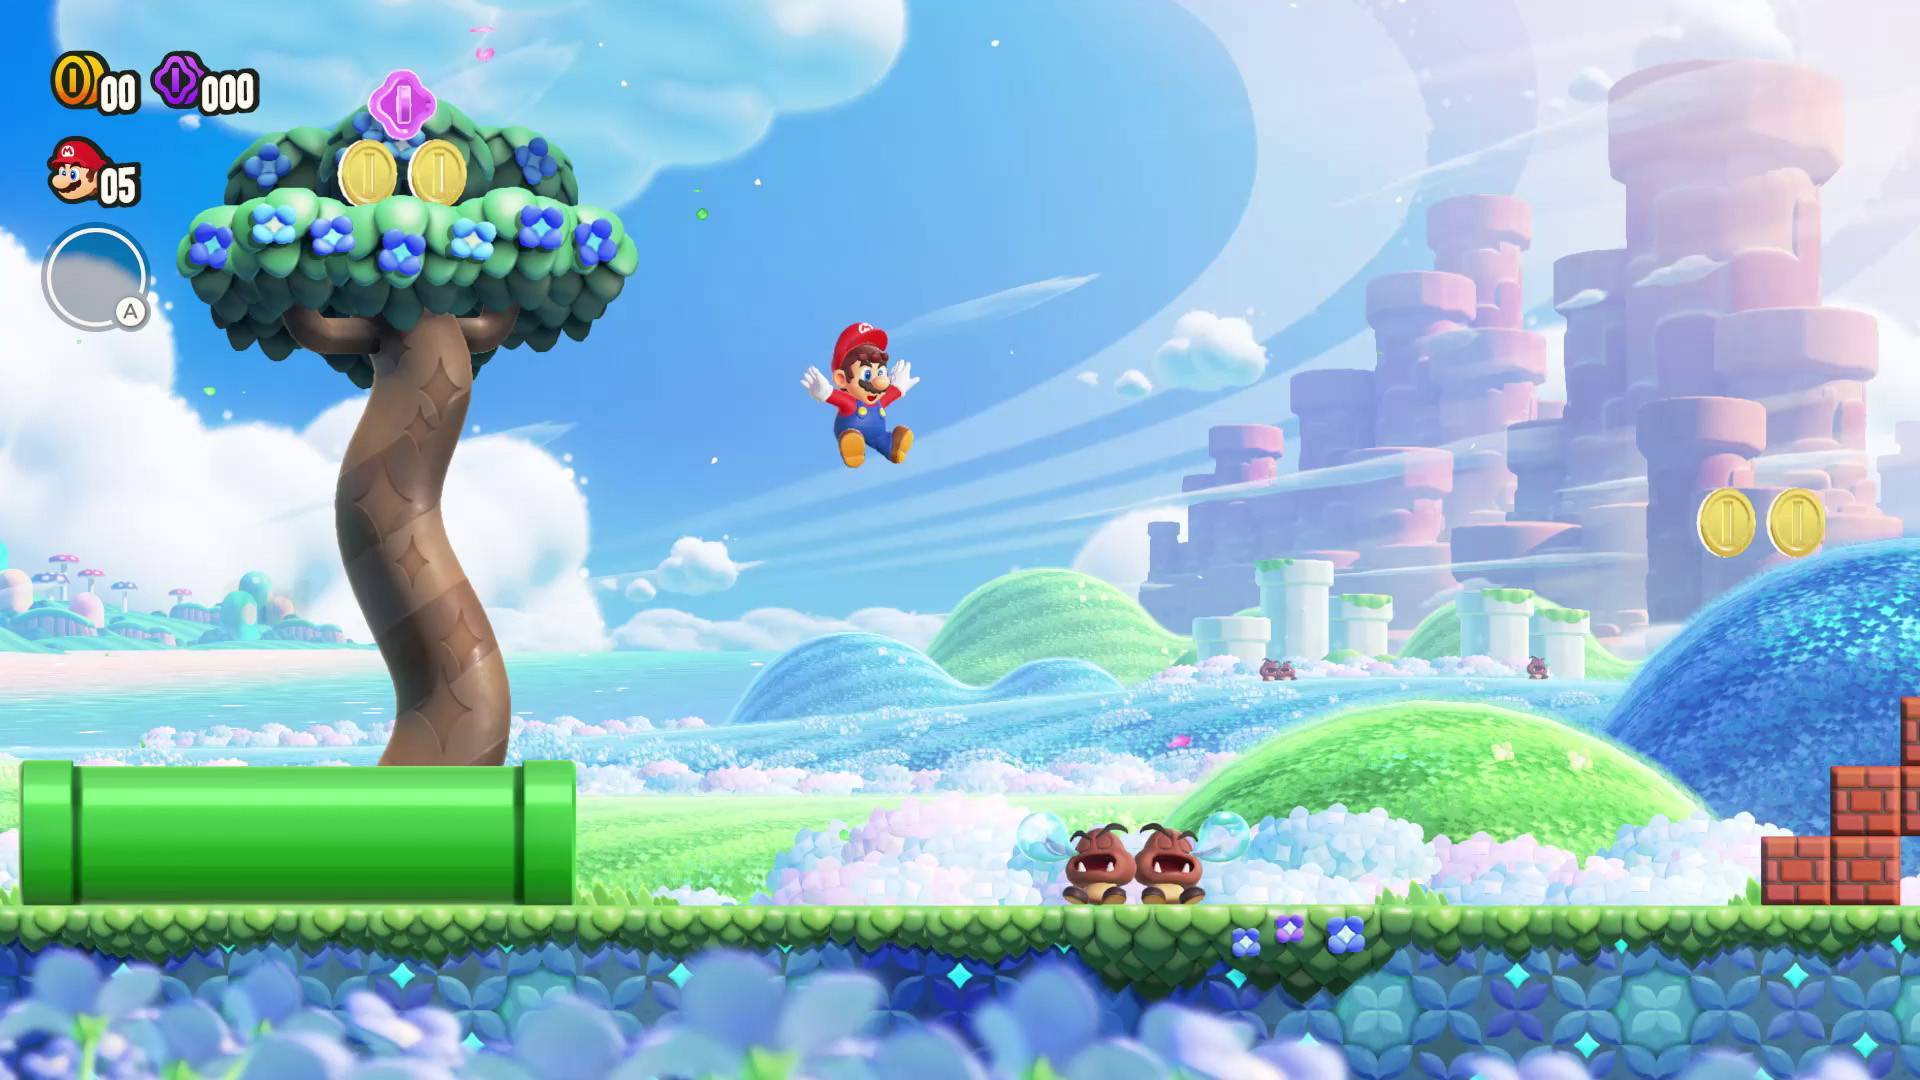 Super Mario Bros. Wonder Standard | Nintendo Switch - Download Code